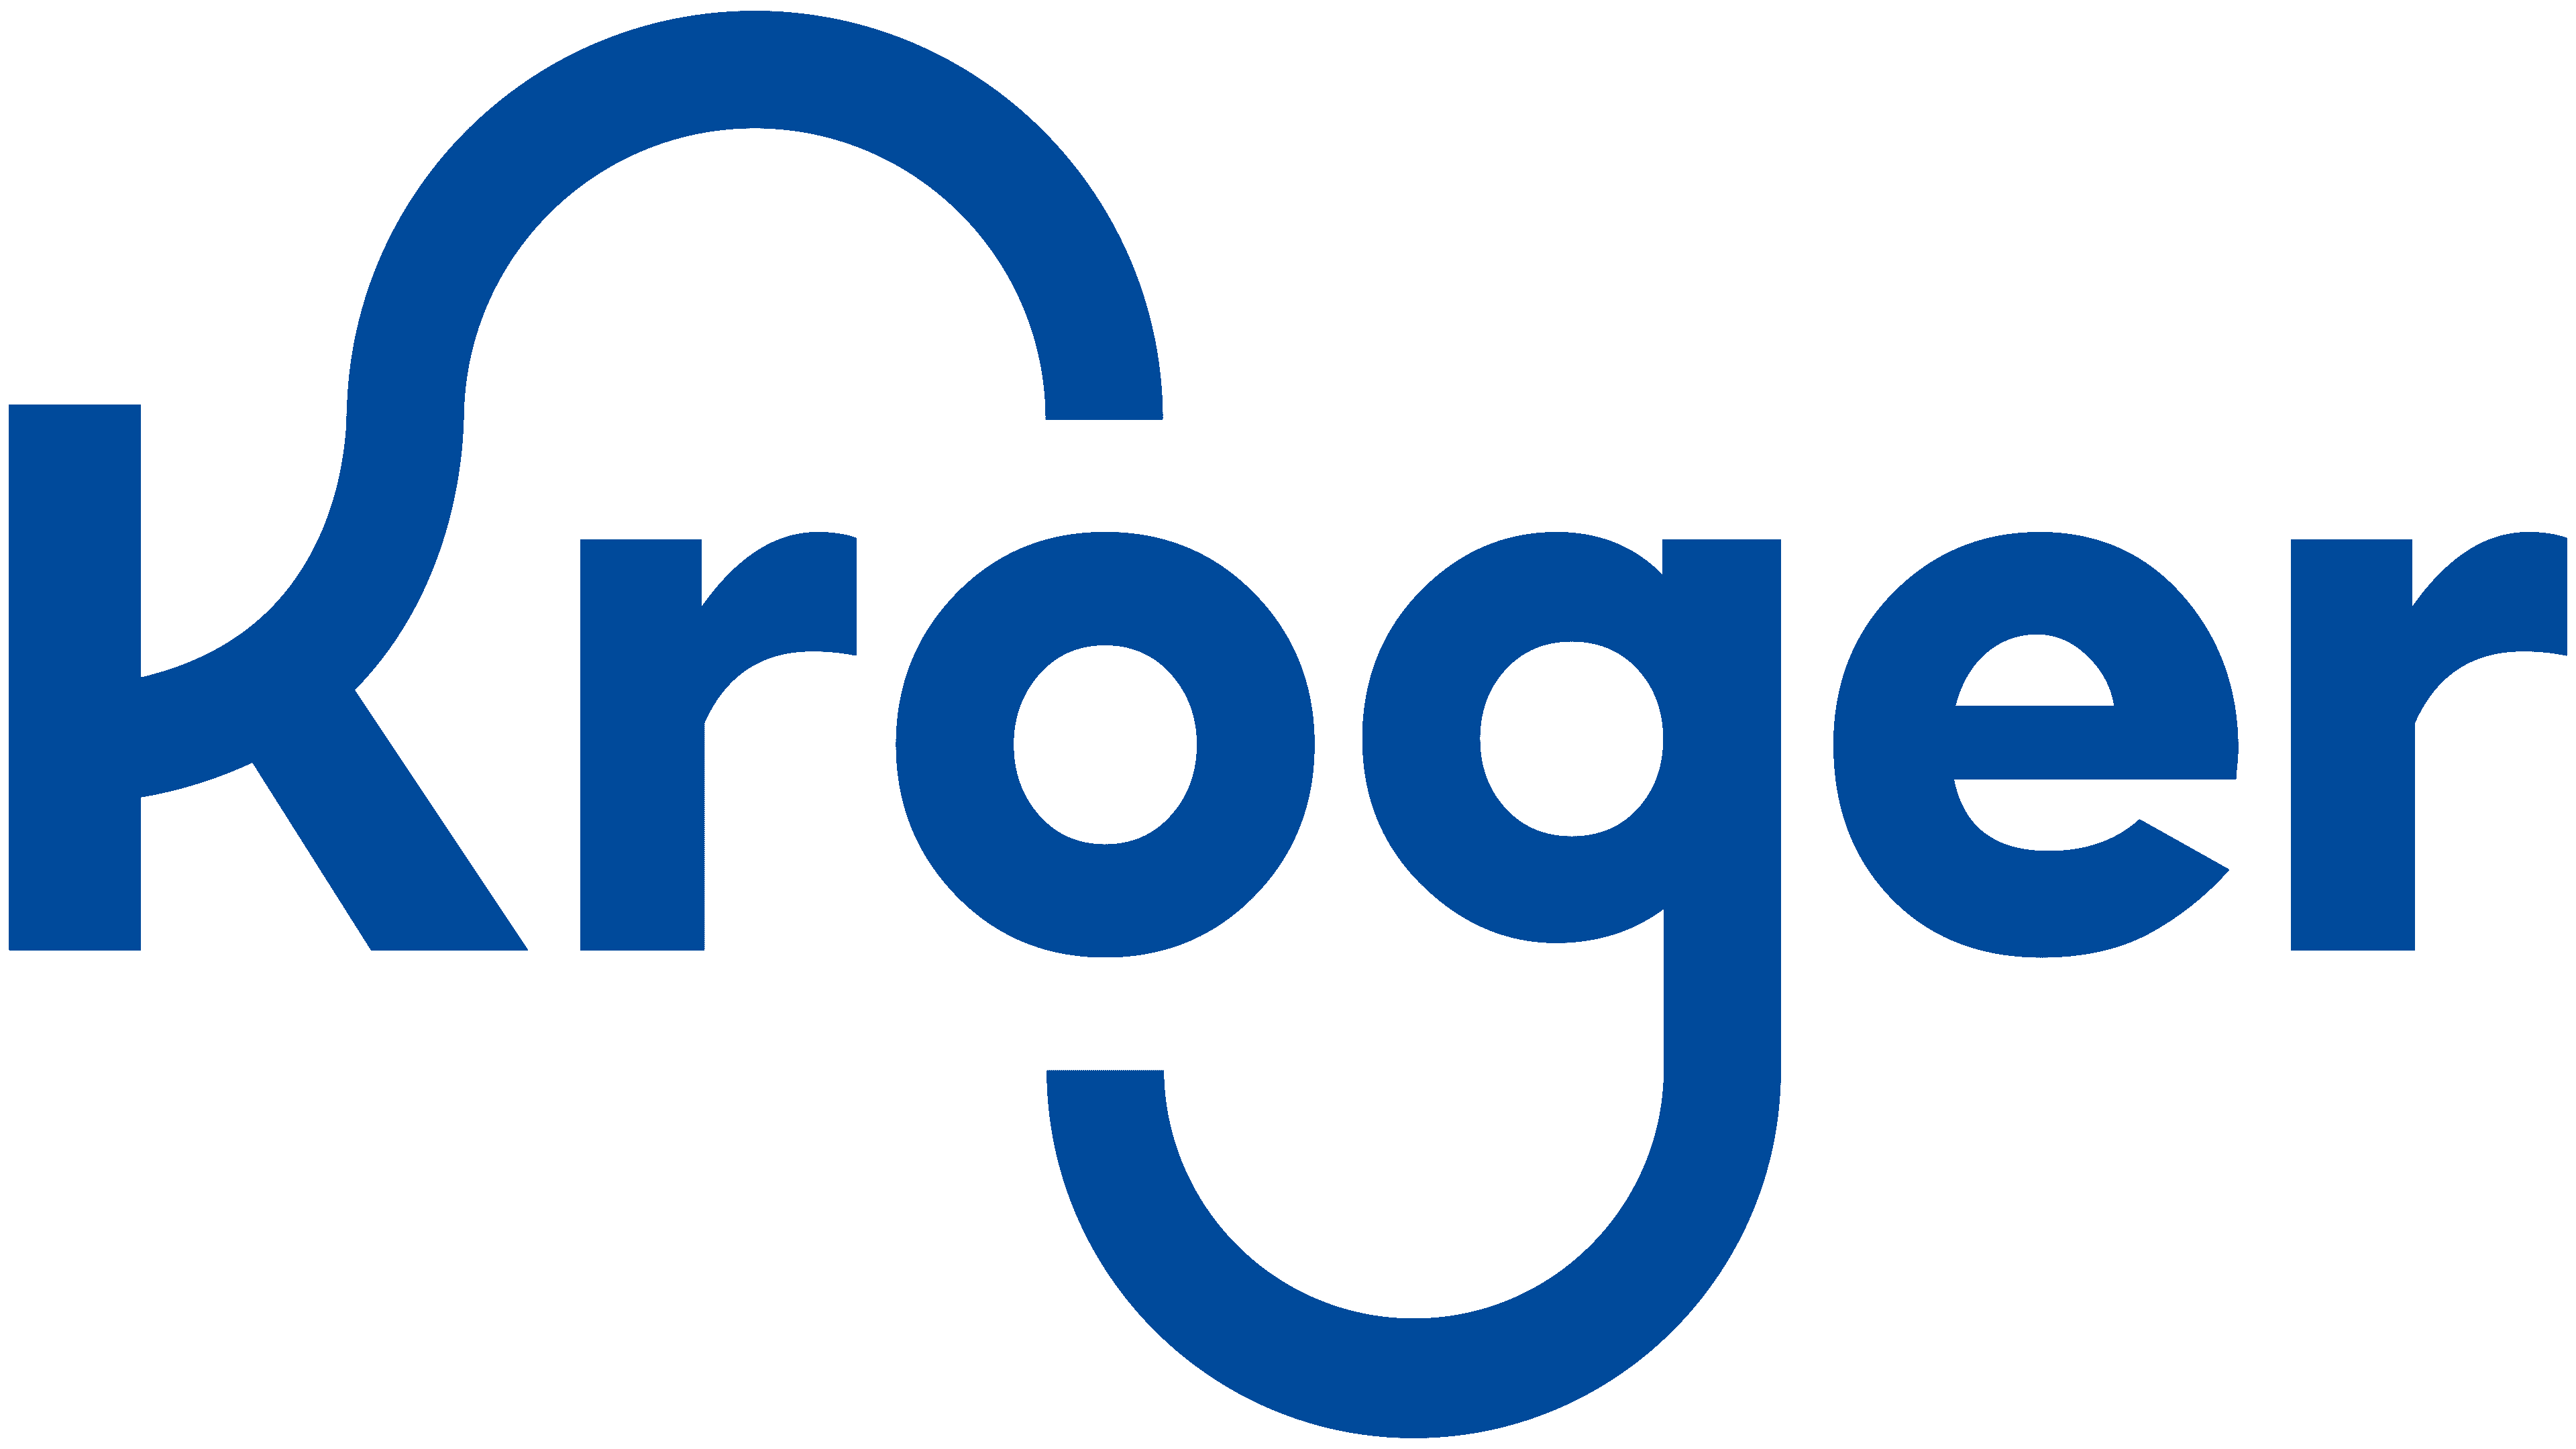 Logotipo de Kroger